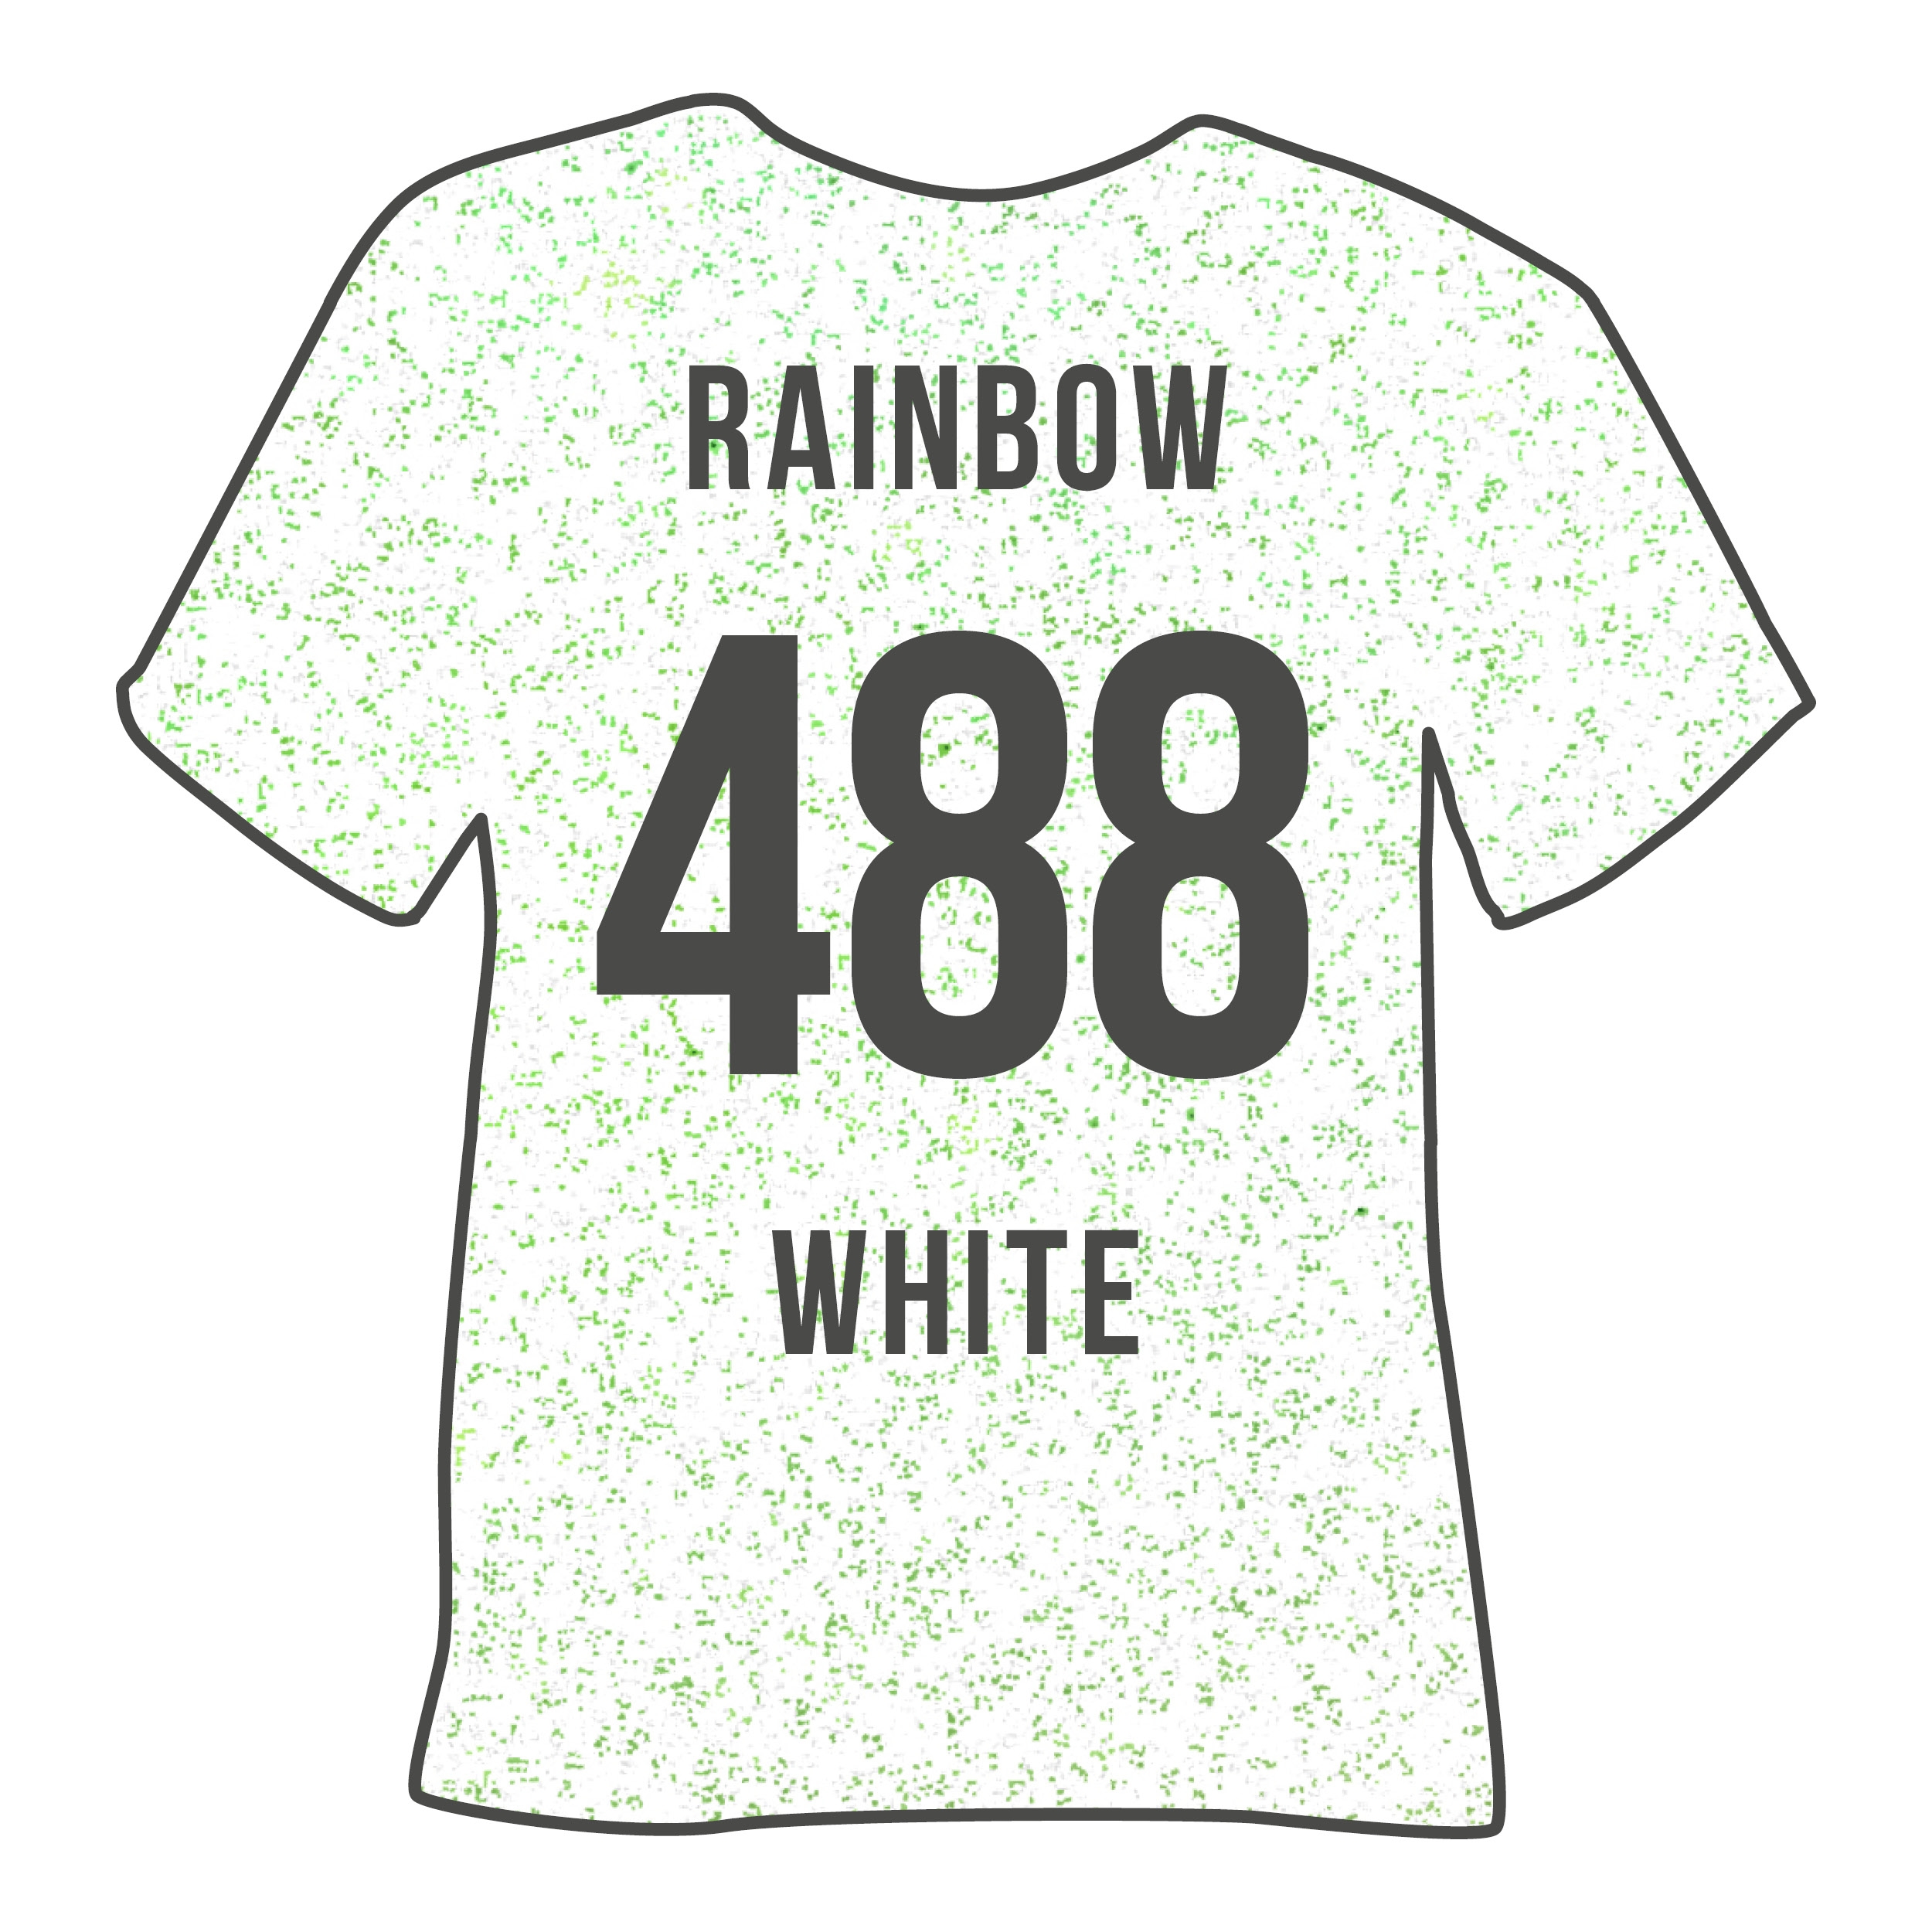 488 rainbow white